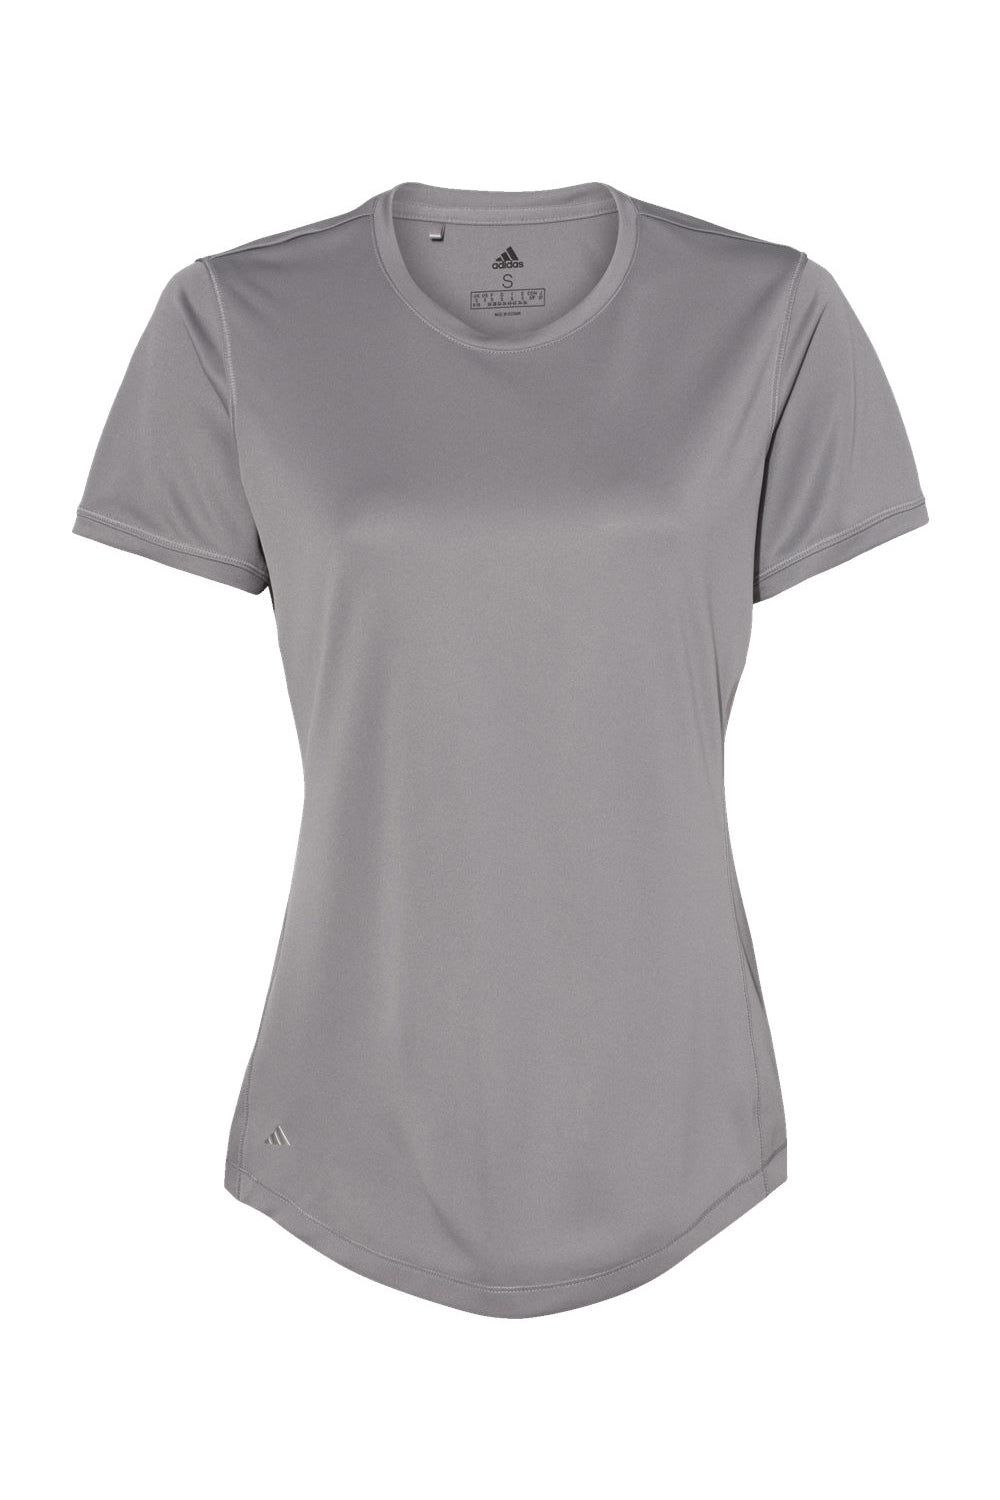 Adidas A377 Womens Short Sleeve Crewneck T-Shirt Grey Flat Front